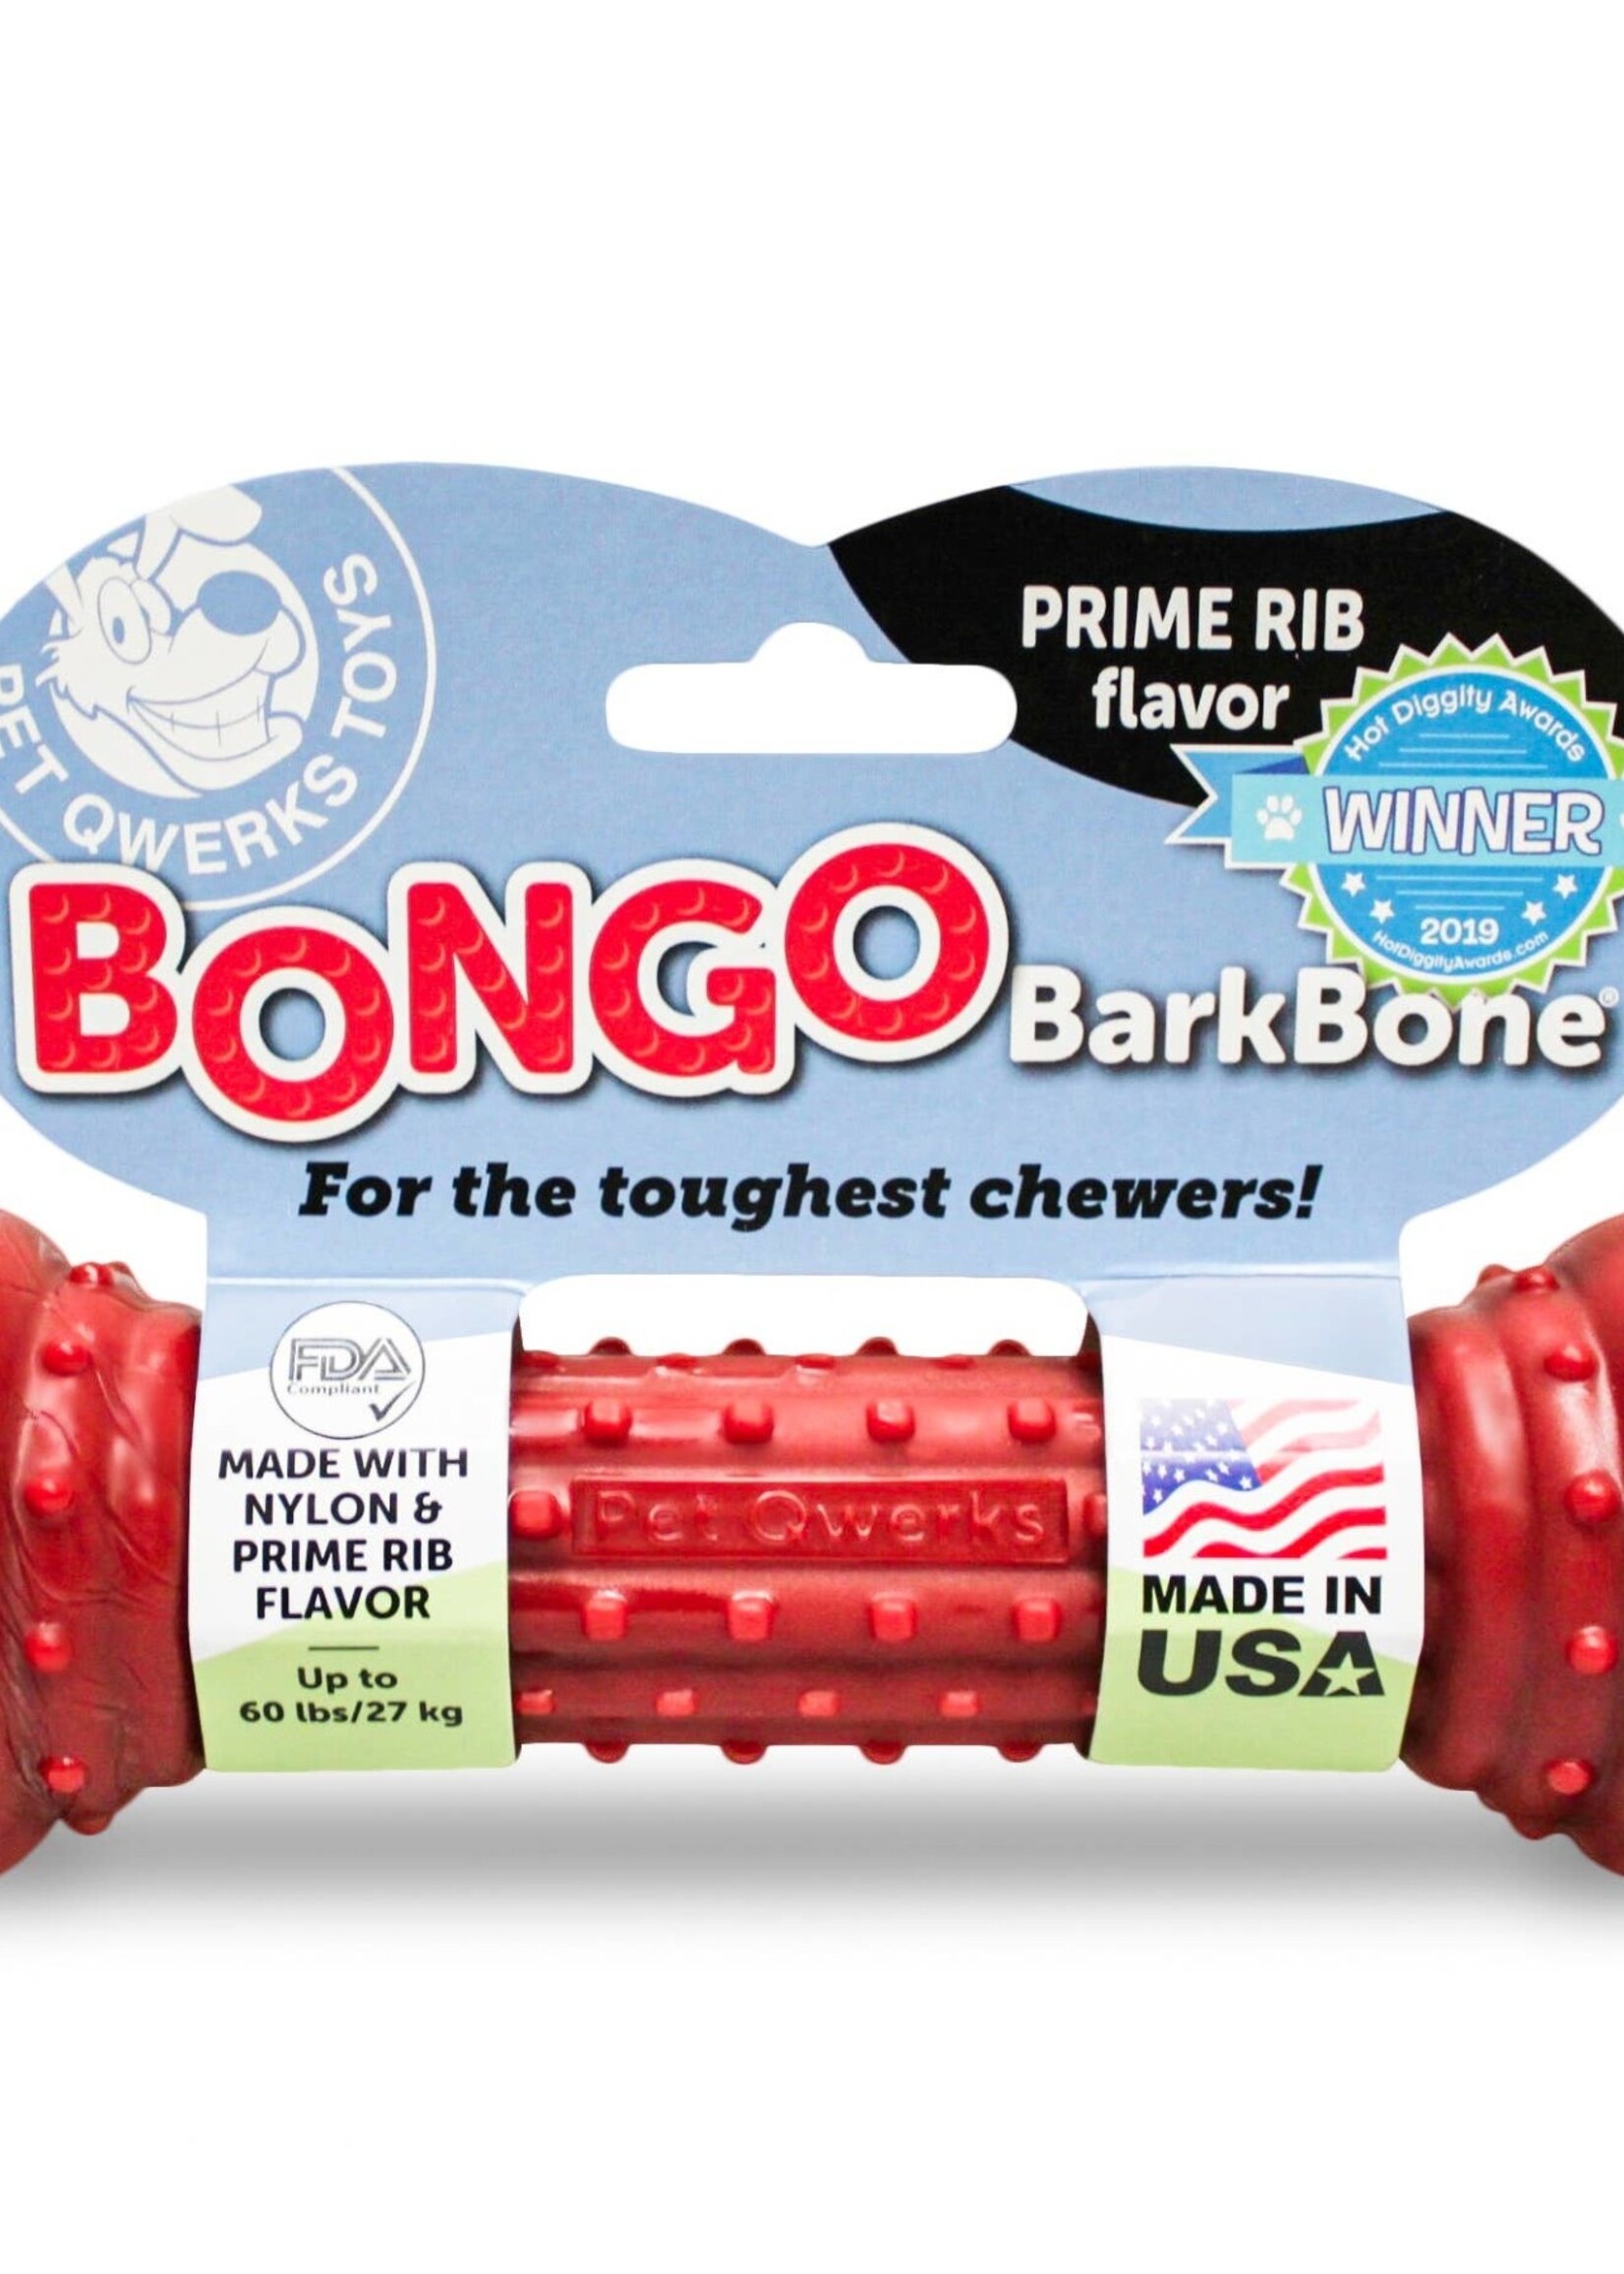 Pet Qwerks Pet Qwerks Bongo Barkbone Prime Rib Flavor Dog Chew Toy